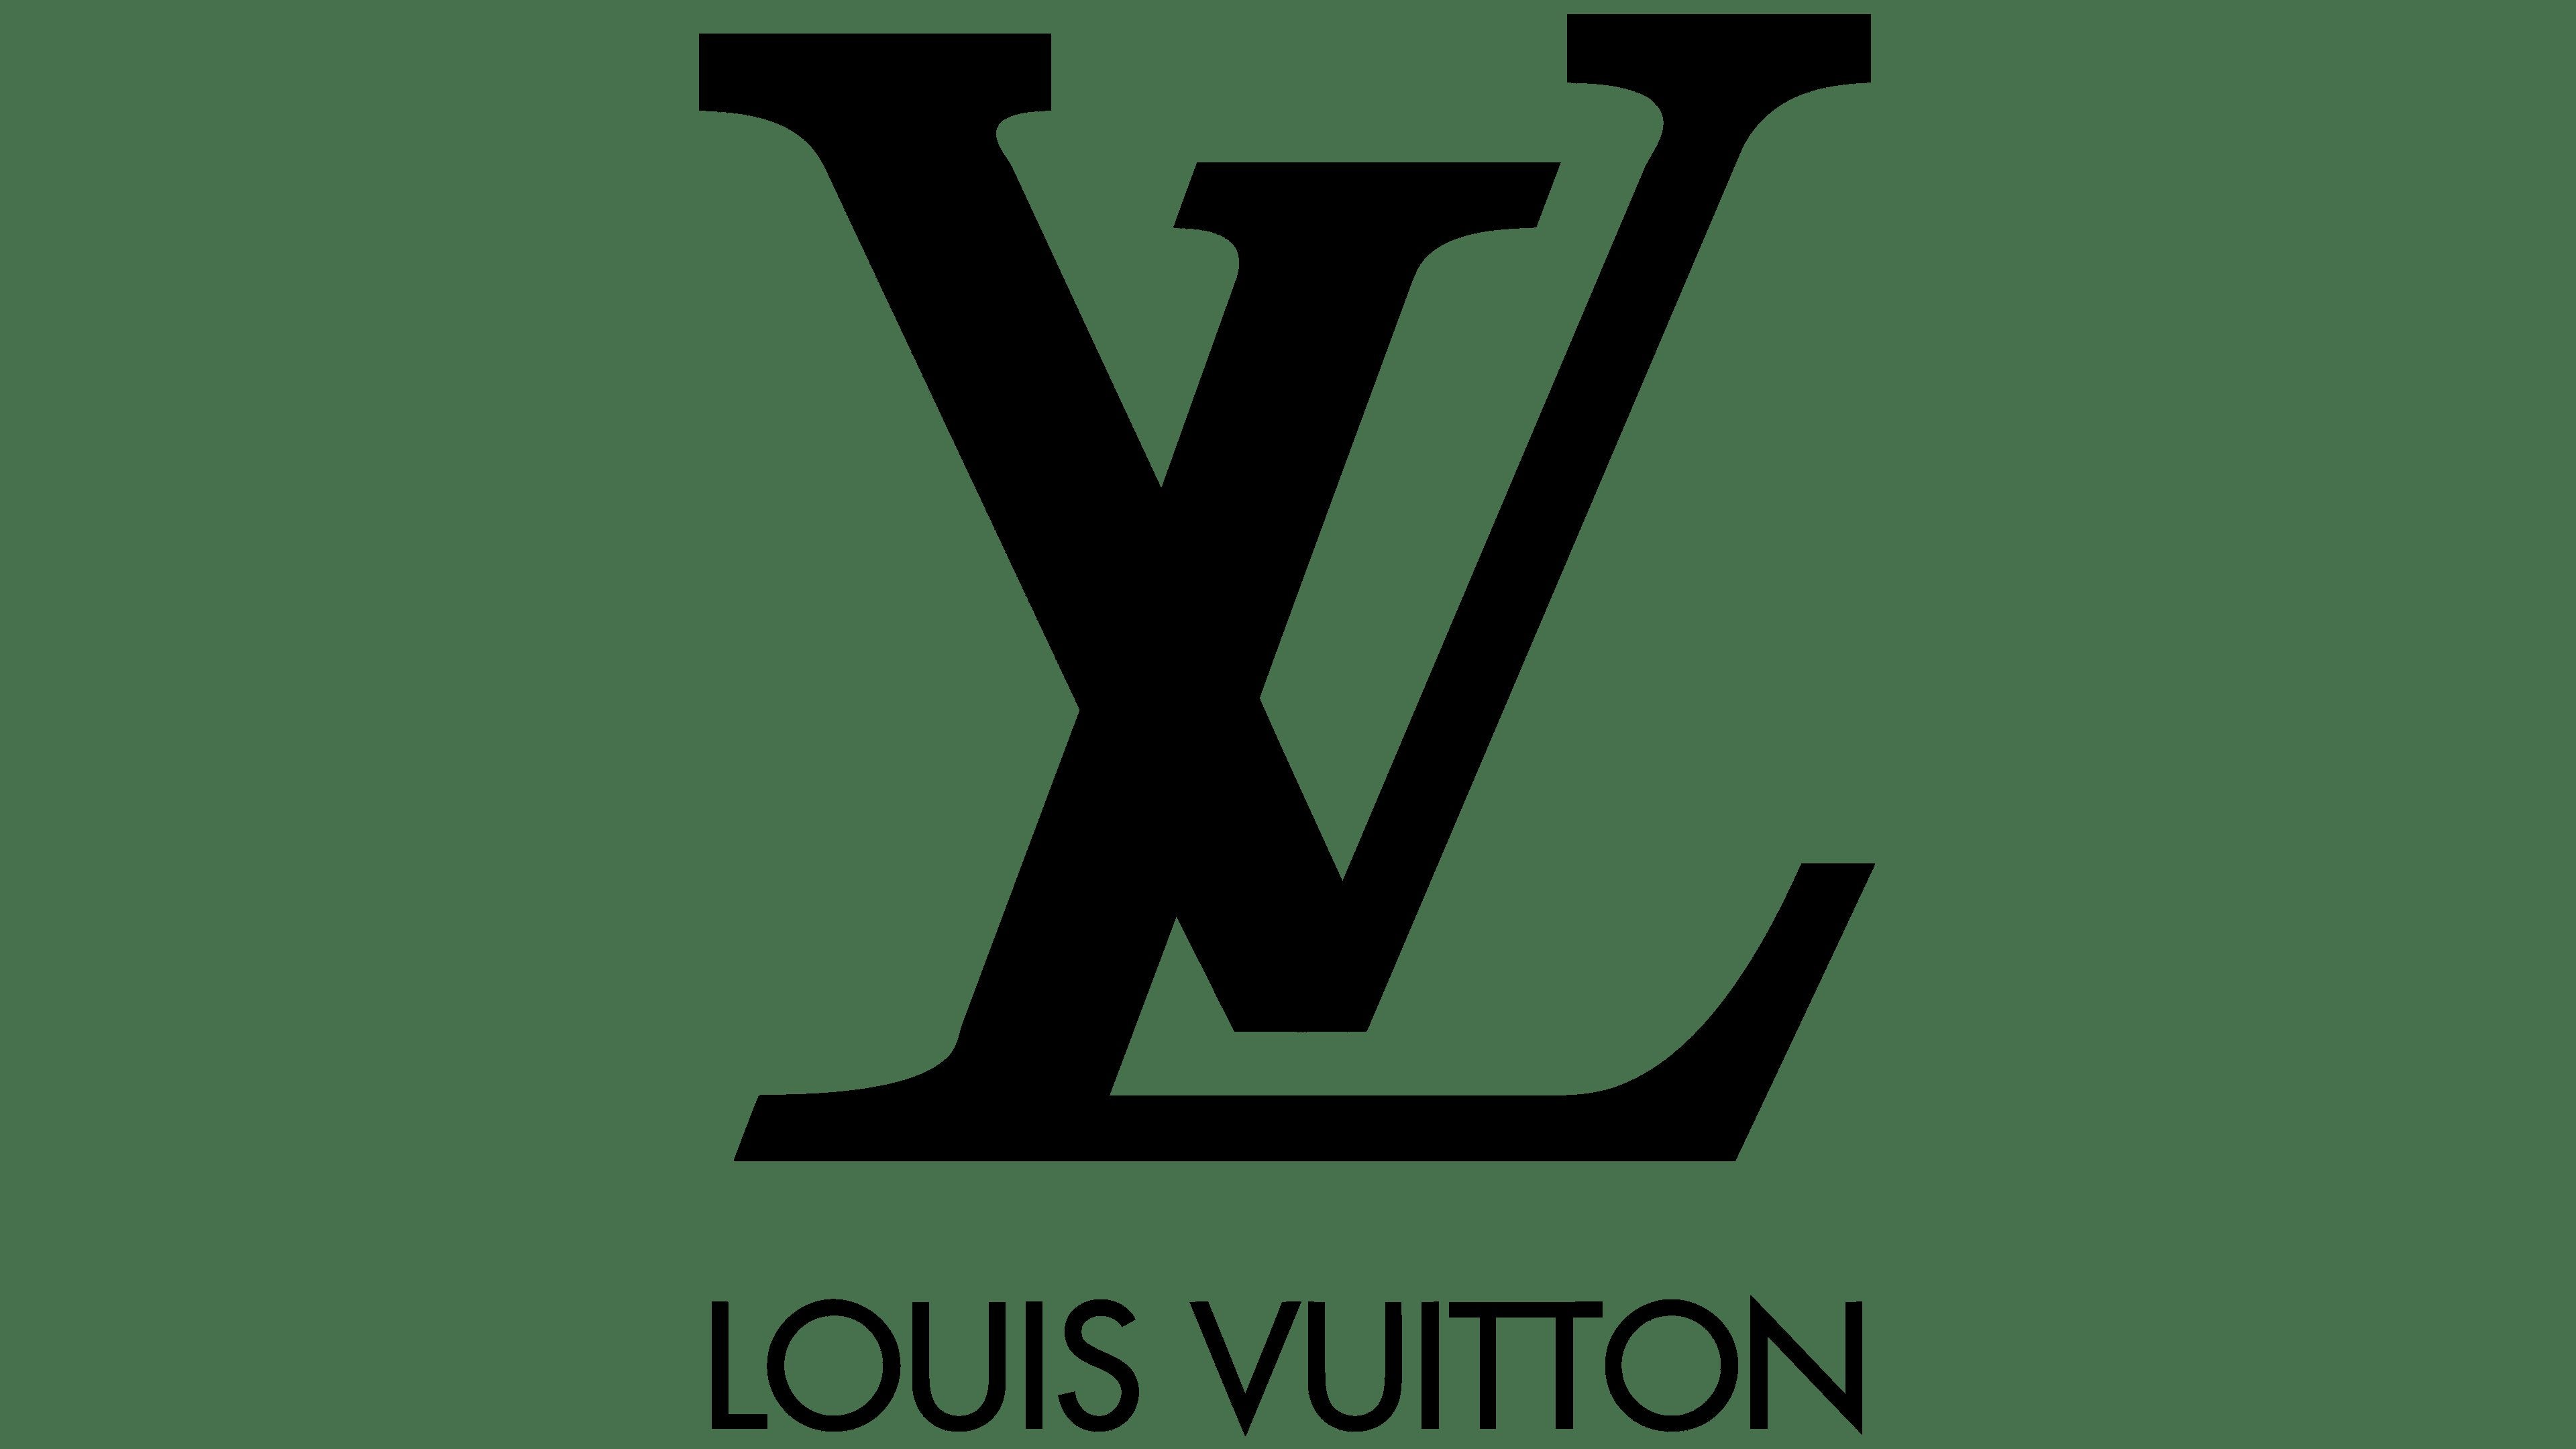 Louis Vuitton NEUWERTIG Monogram Pochette Noir Portemonnaie